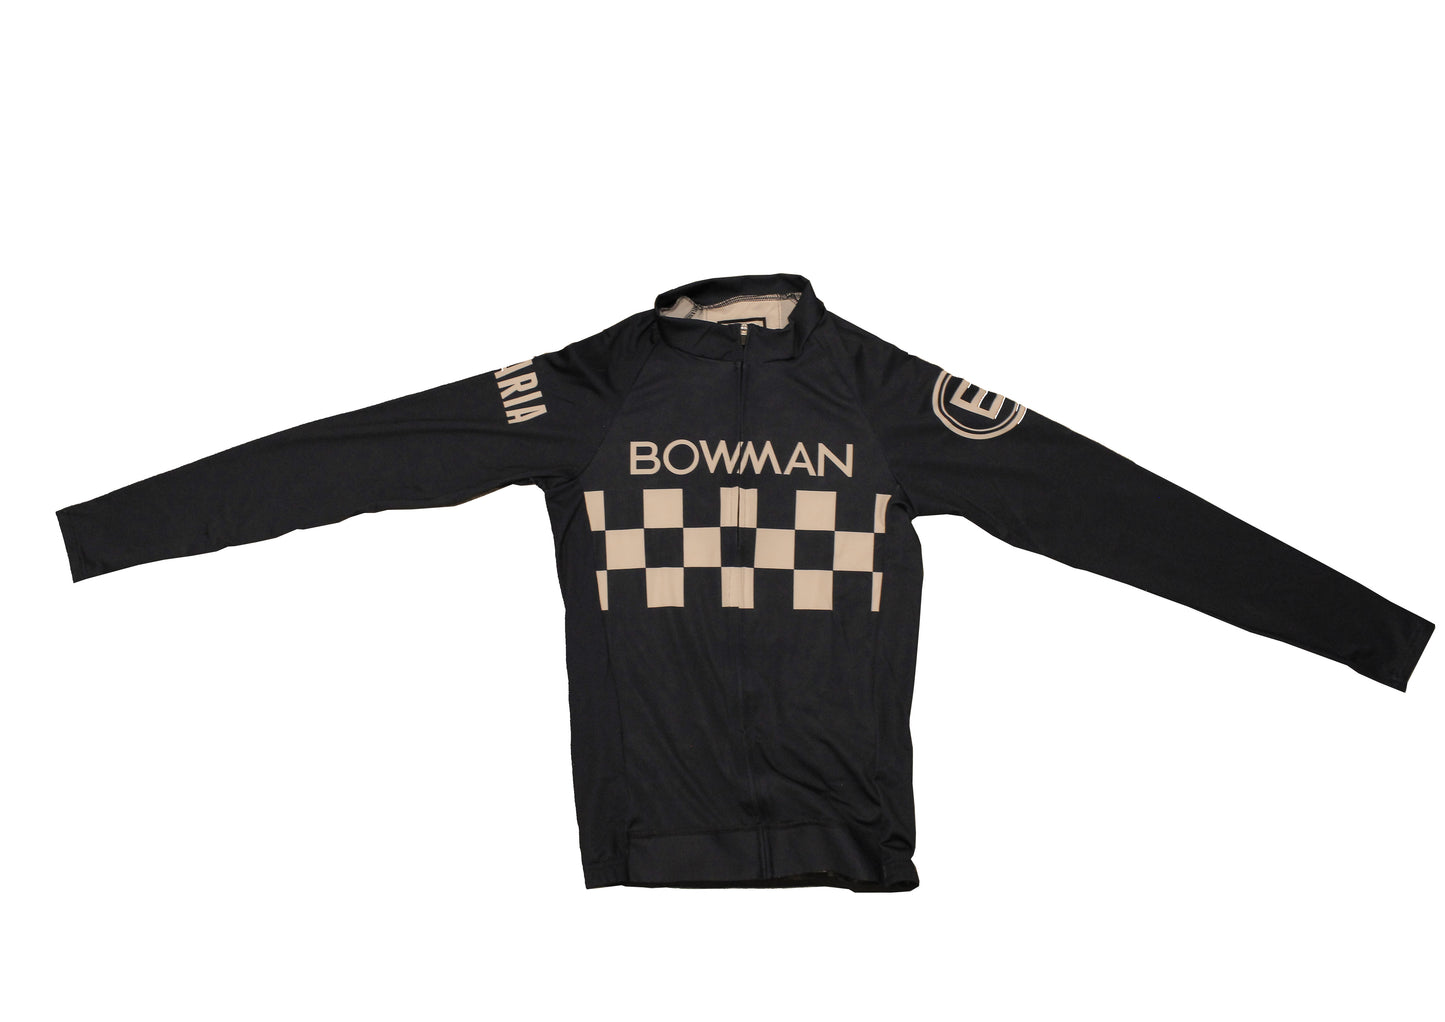 Bowman Long Sleeve Men’s Cycling Jersey